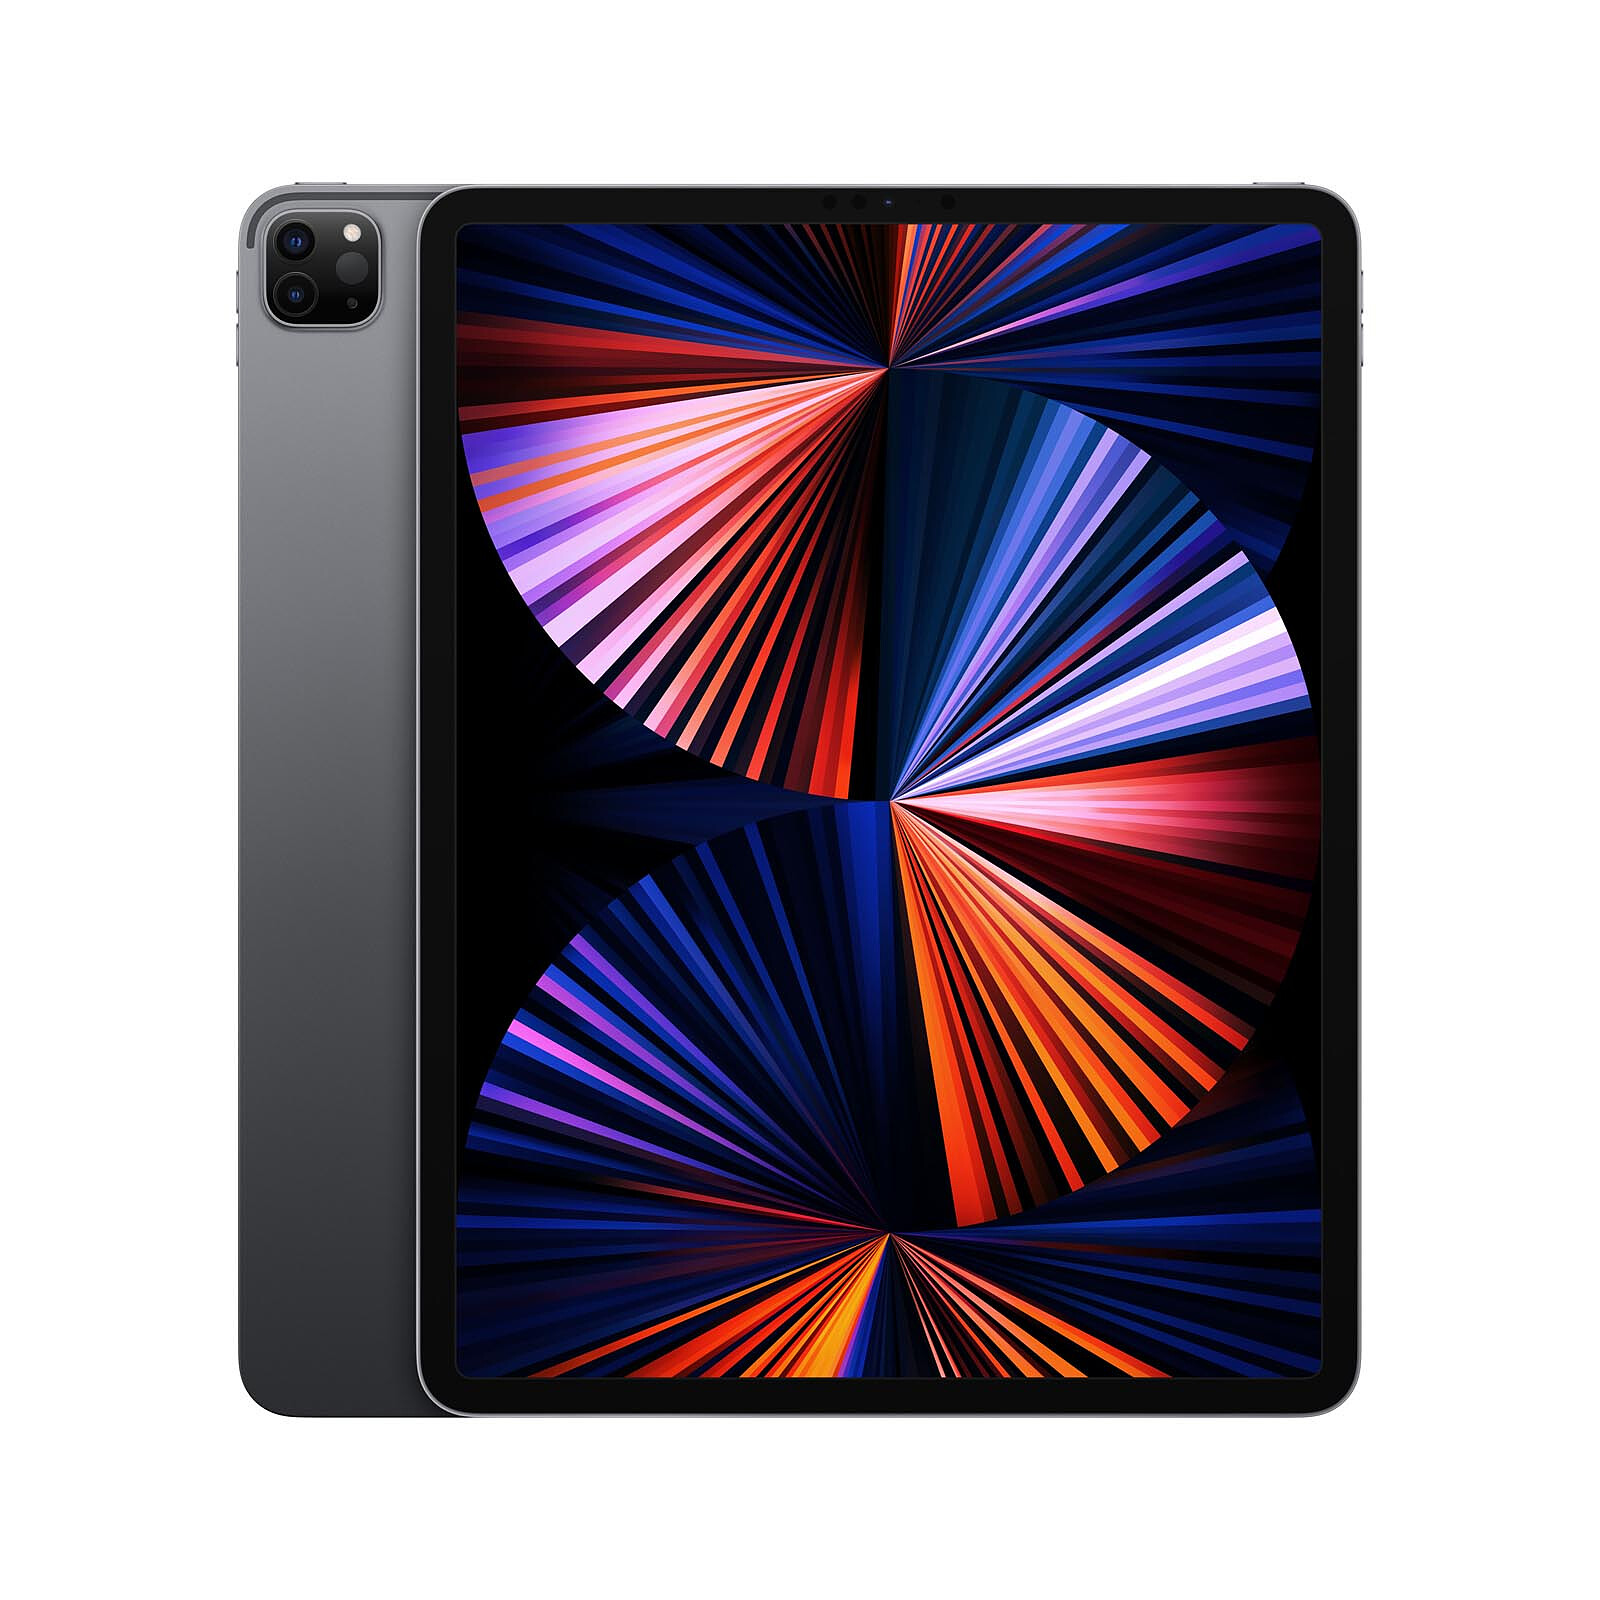 Apple iPad Pro (2021) 12.9 inch 256GB Wi-Fi Space Grey - Tablet